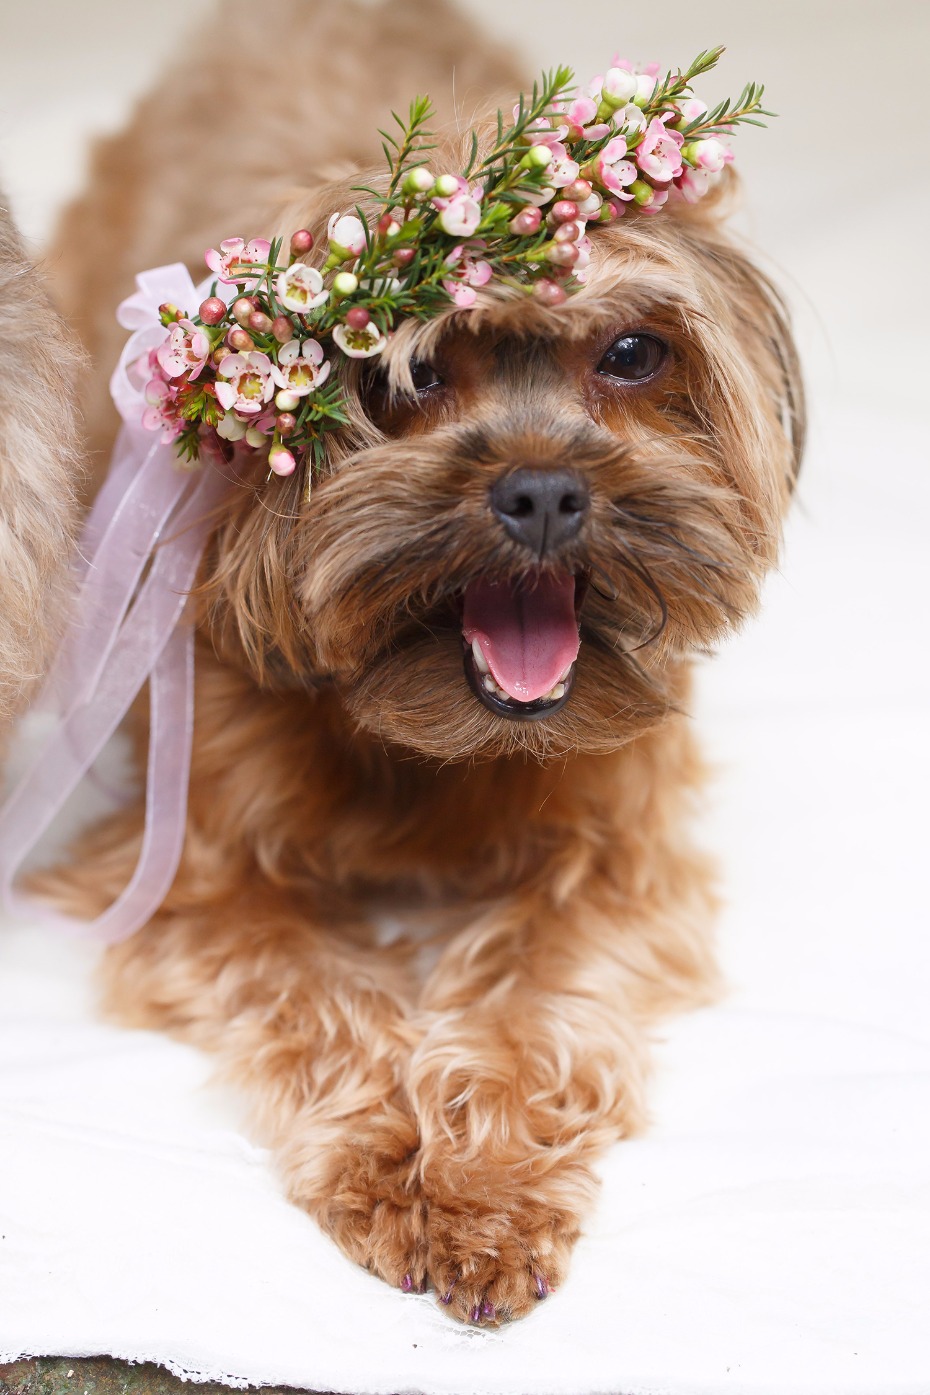 Puppy bride in a pink flower crown for her wedding day.